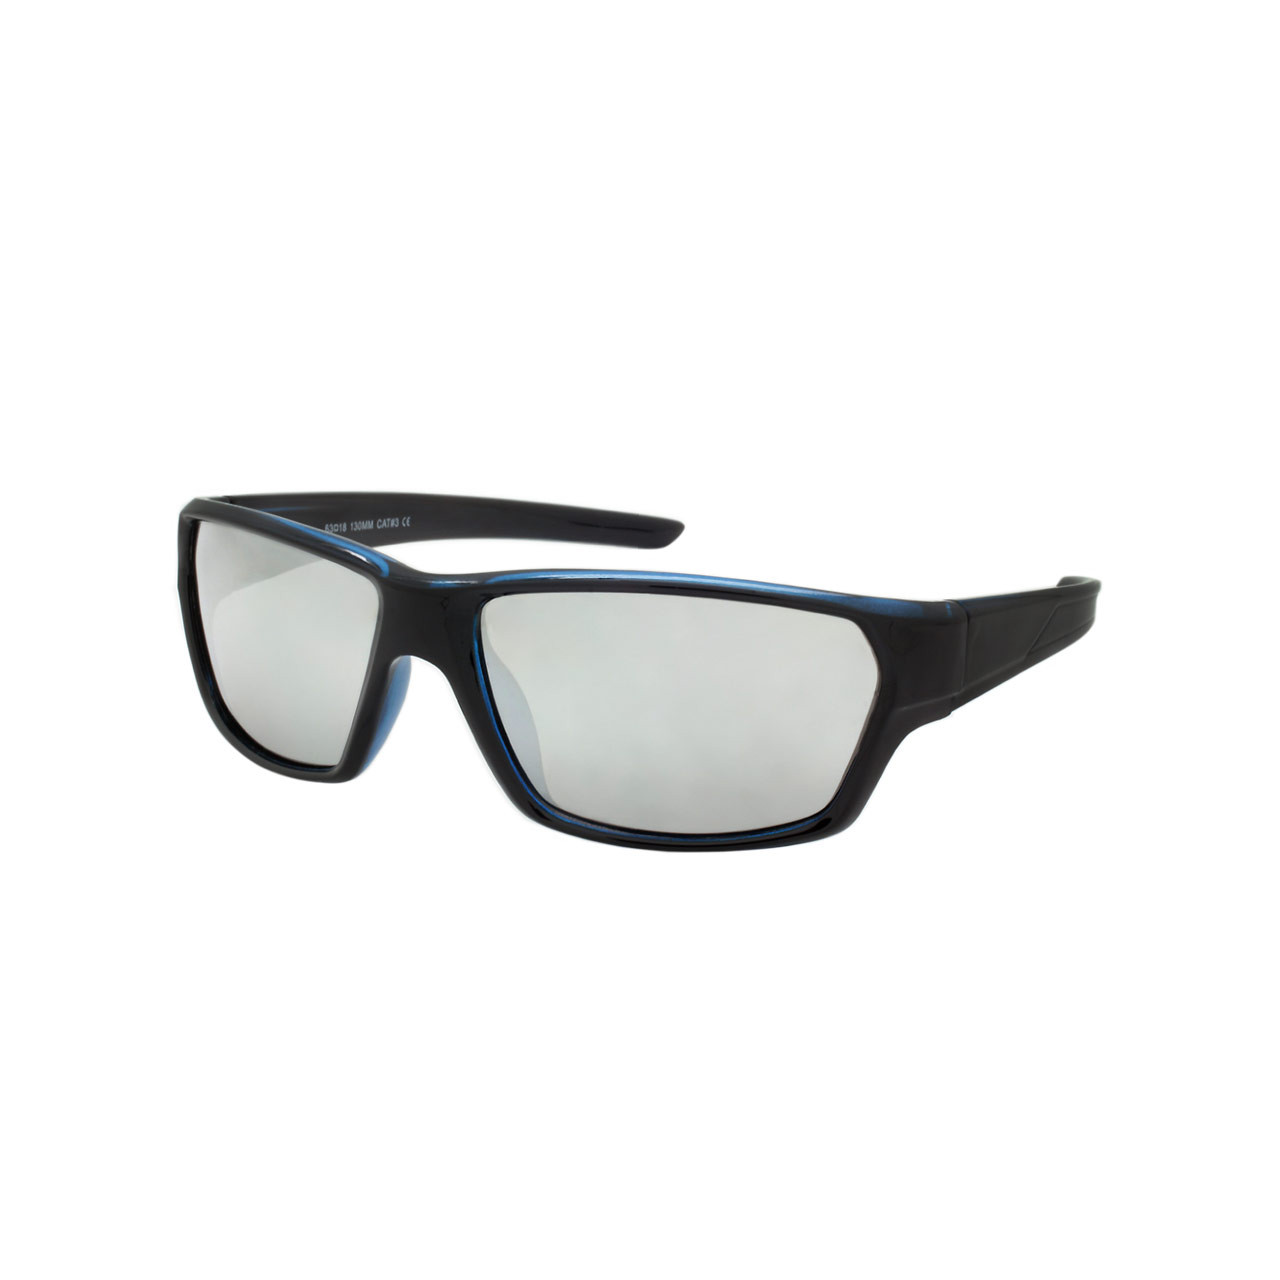 MENS SPORT SUNGLASSES WHOLESALE I ASSTD. 12 PCS I GY03 - Shark Eyes, Inc. - Wholesale  Sunglasses, Reading Glasses, & Displays